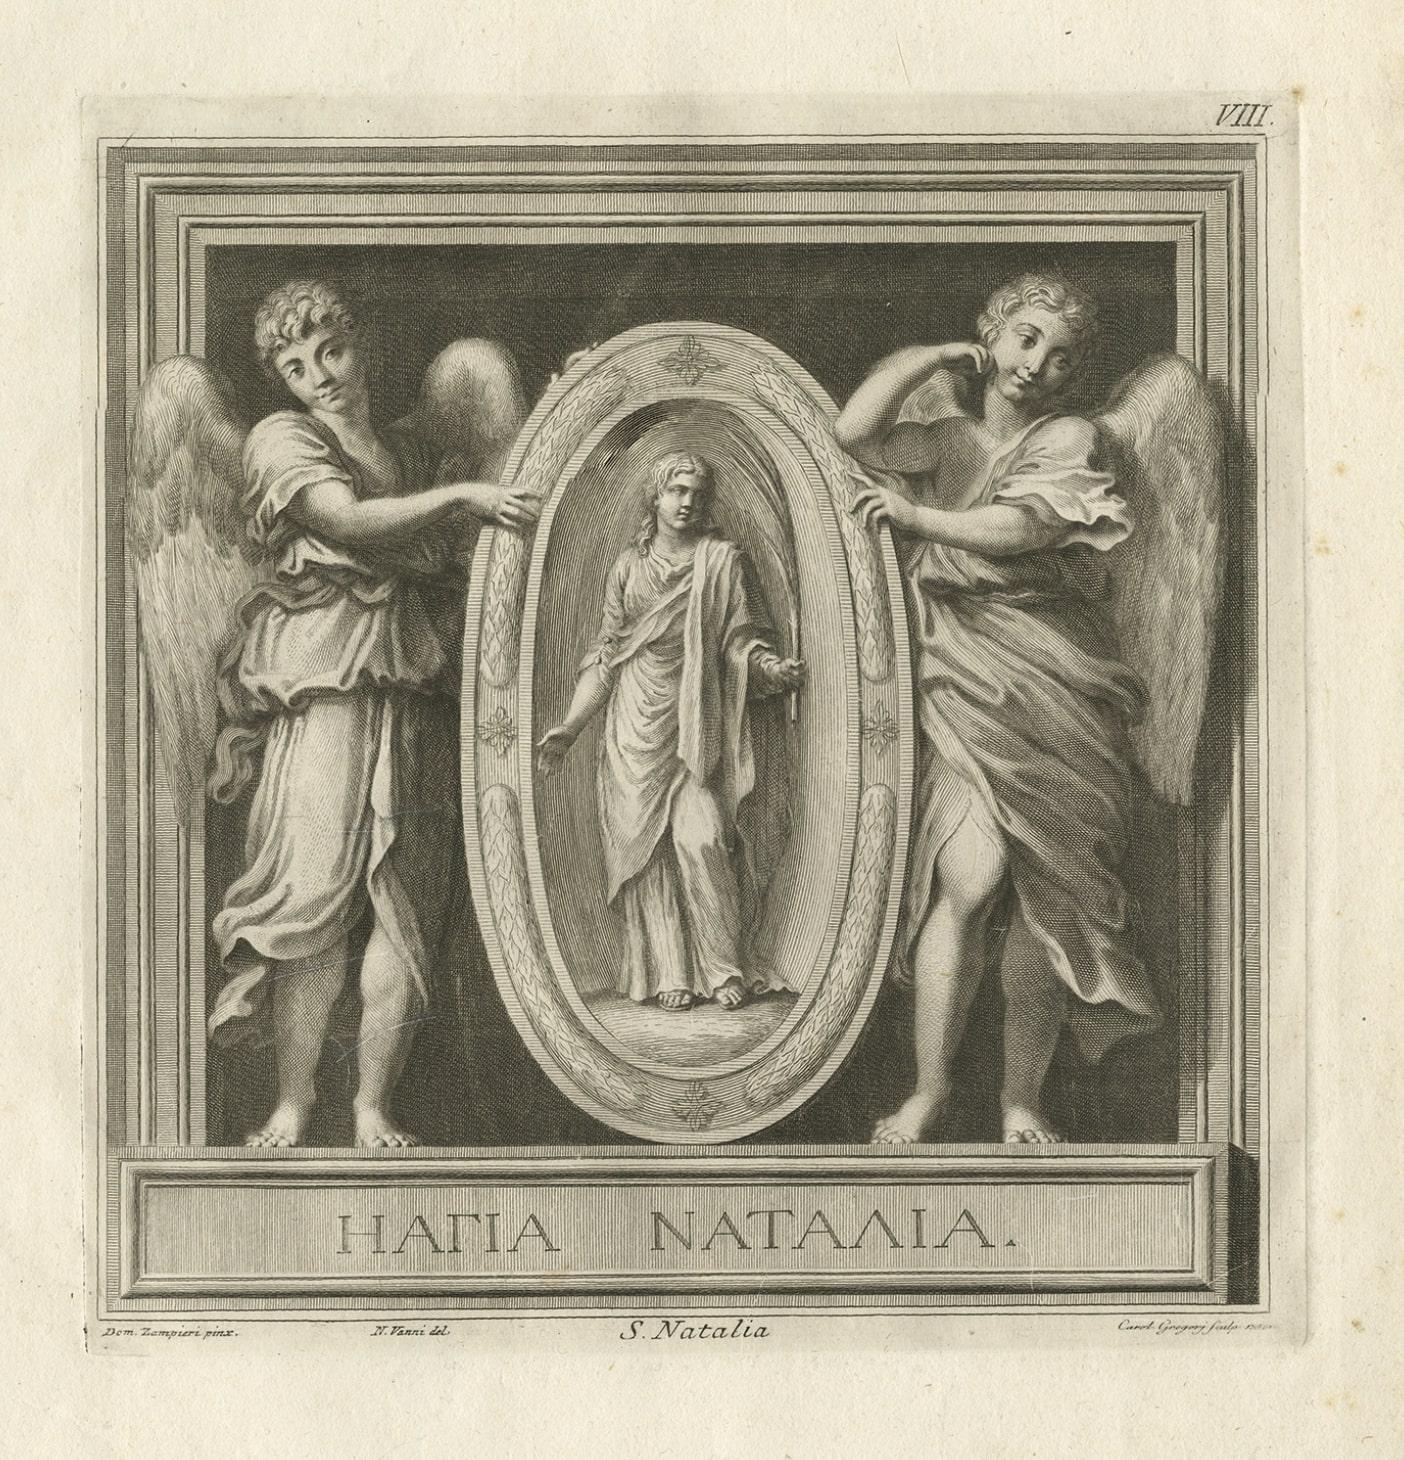 Paper Original Antique Engraving of Saint Natalie, 1762 For Sale